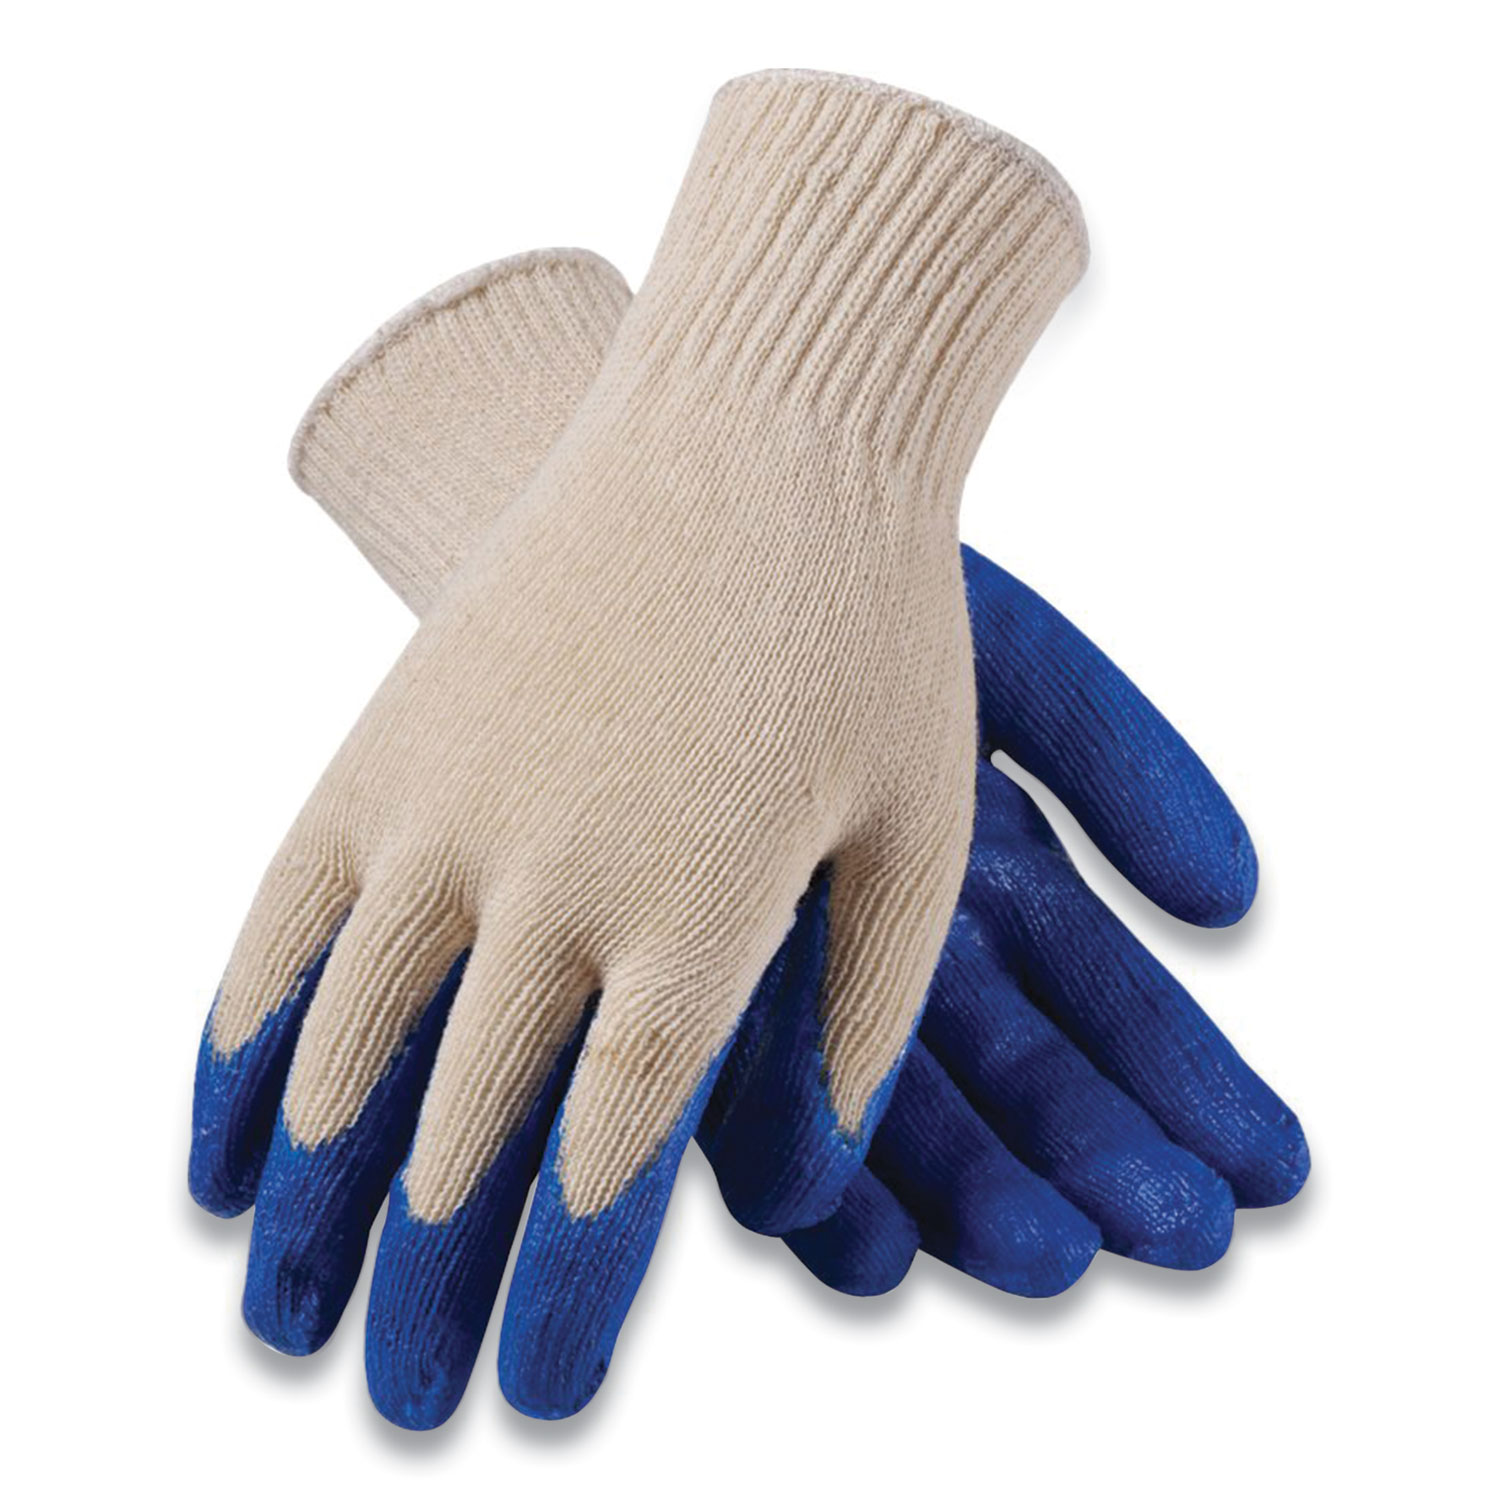  PIP 39-C122/L Seamless Knit Cotton/Polyester Gloves, Regular Grade, Large, White/Blue, 12 Pairs (PID179959) 